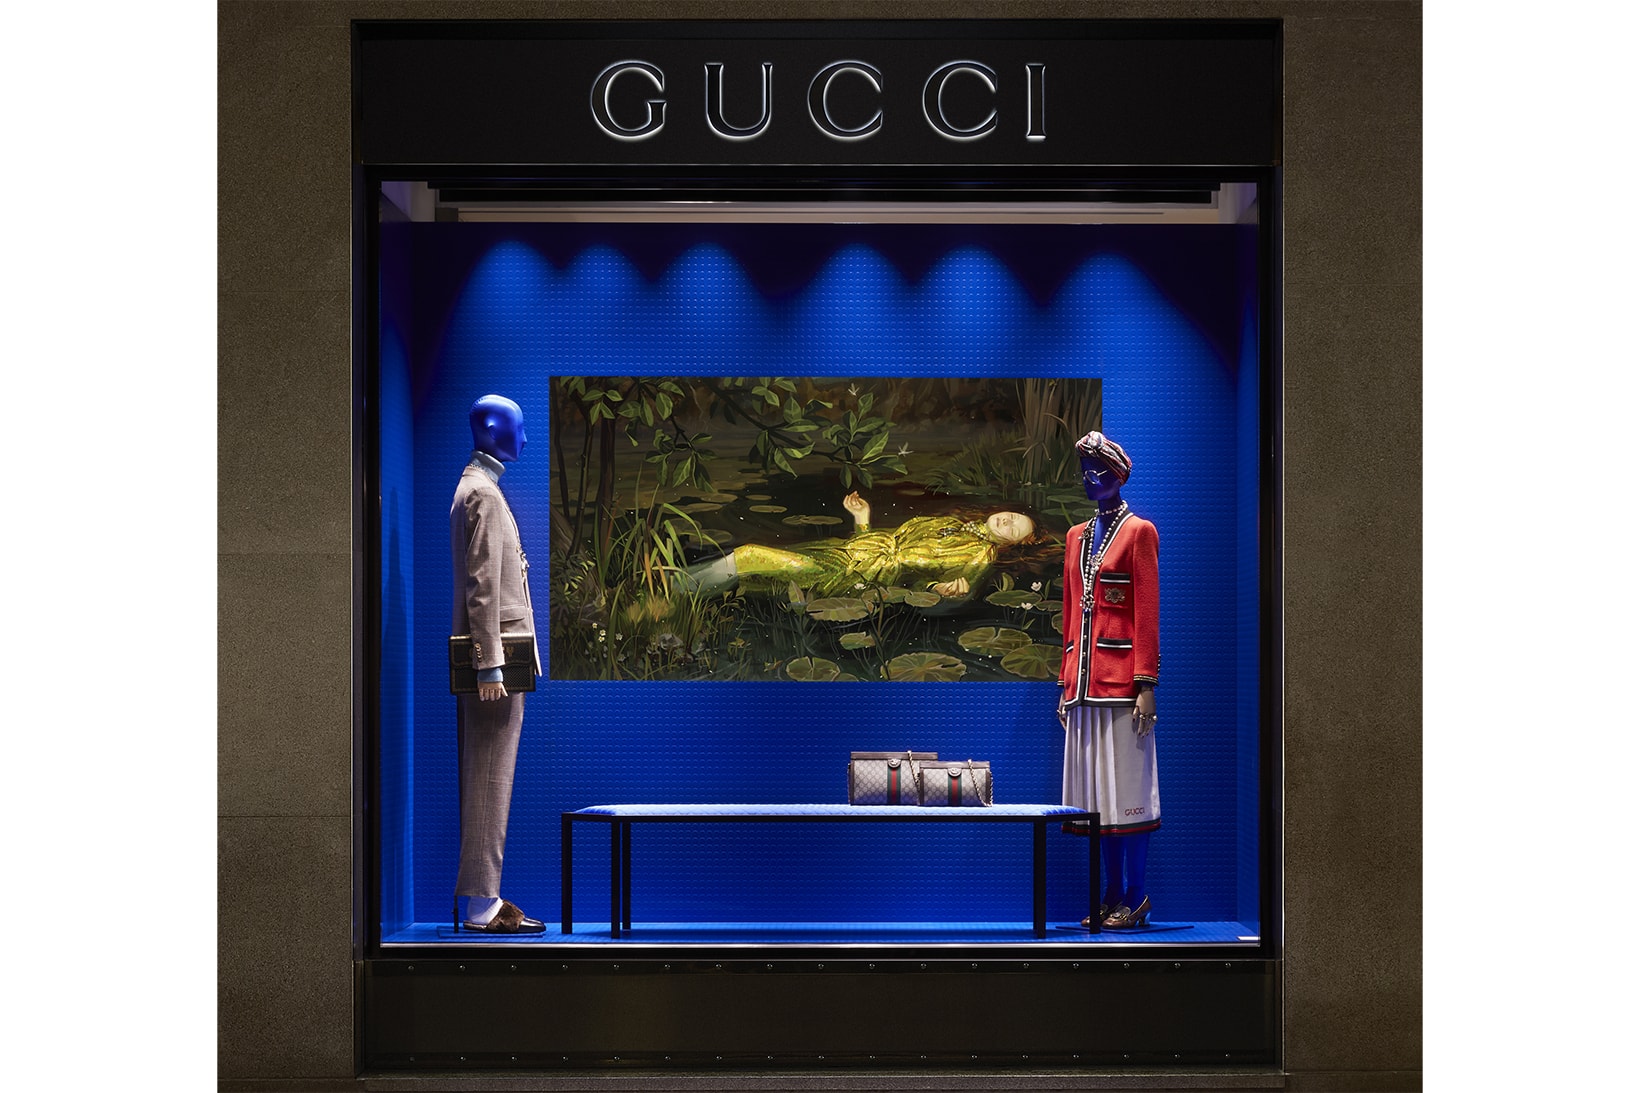 Gucci Ignasi Monreal Digital Experience storefronts windows art design 2018 spring summer campaign surreal hallucination